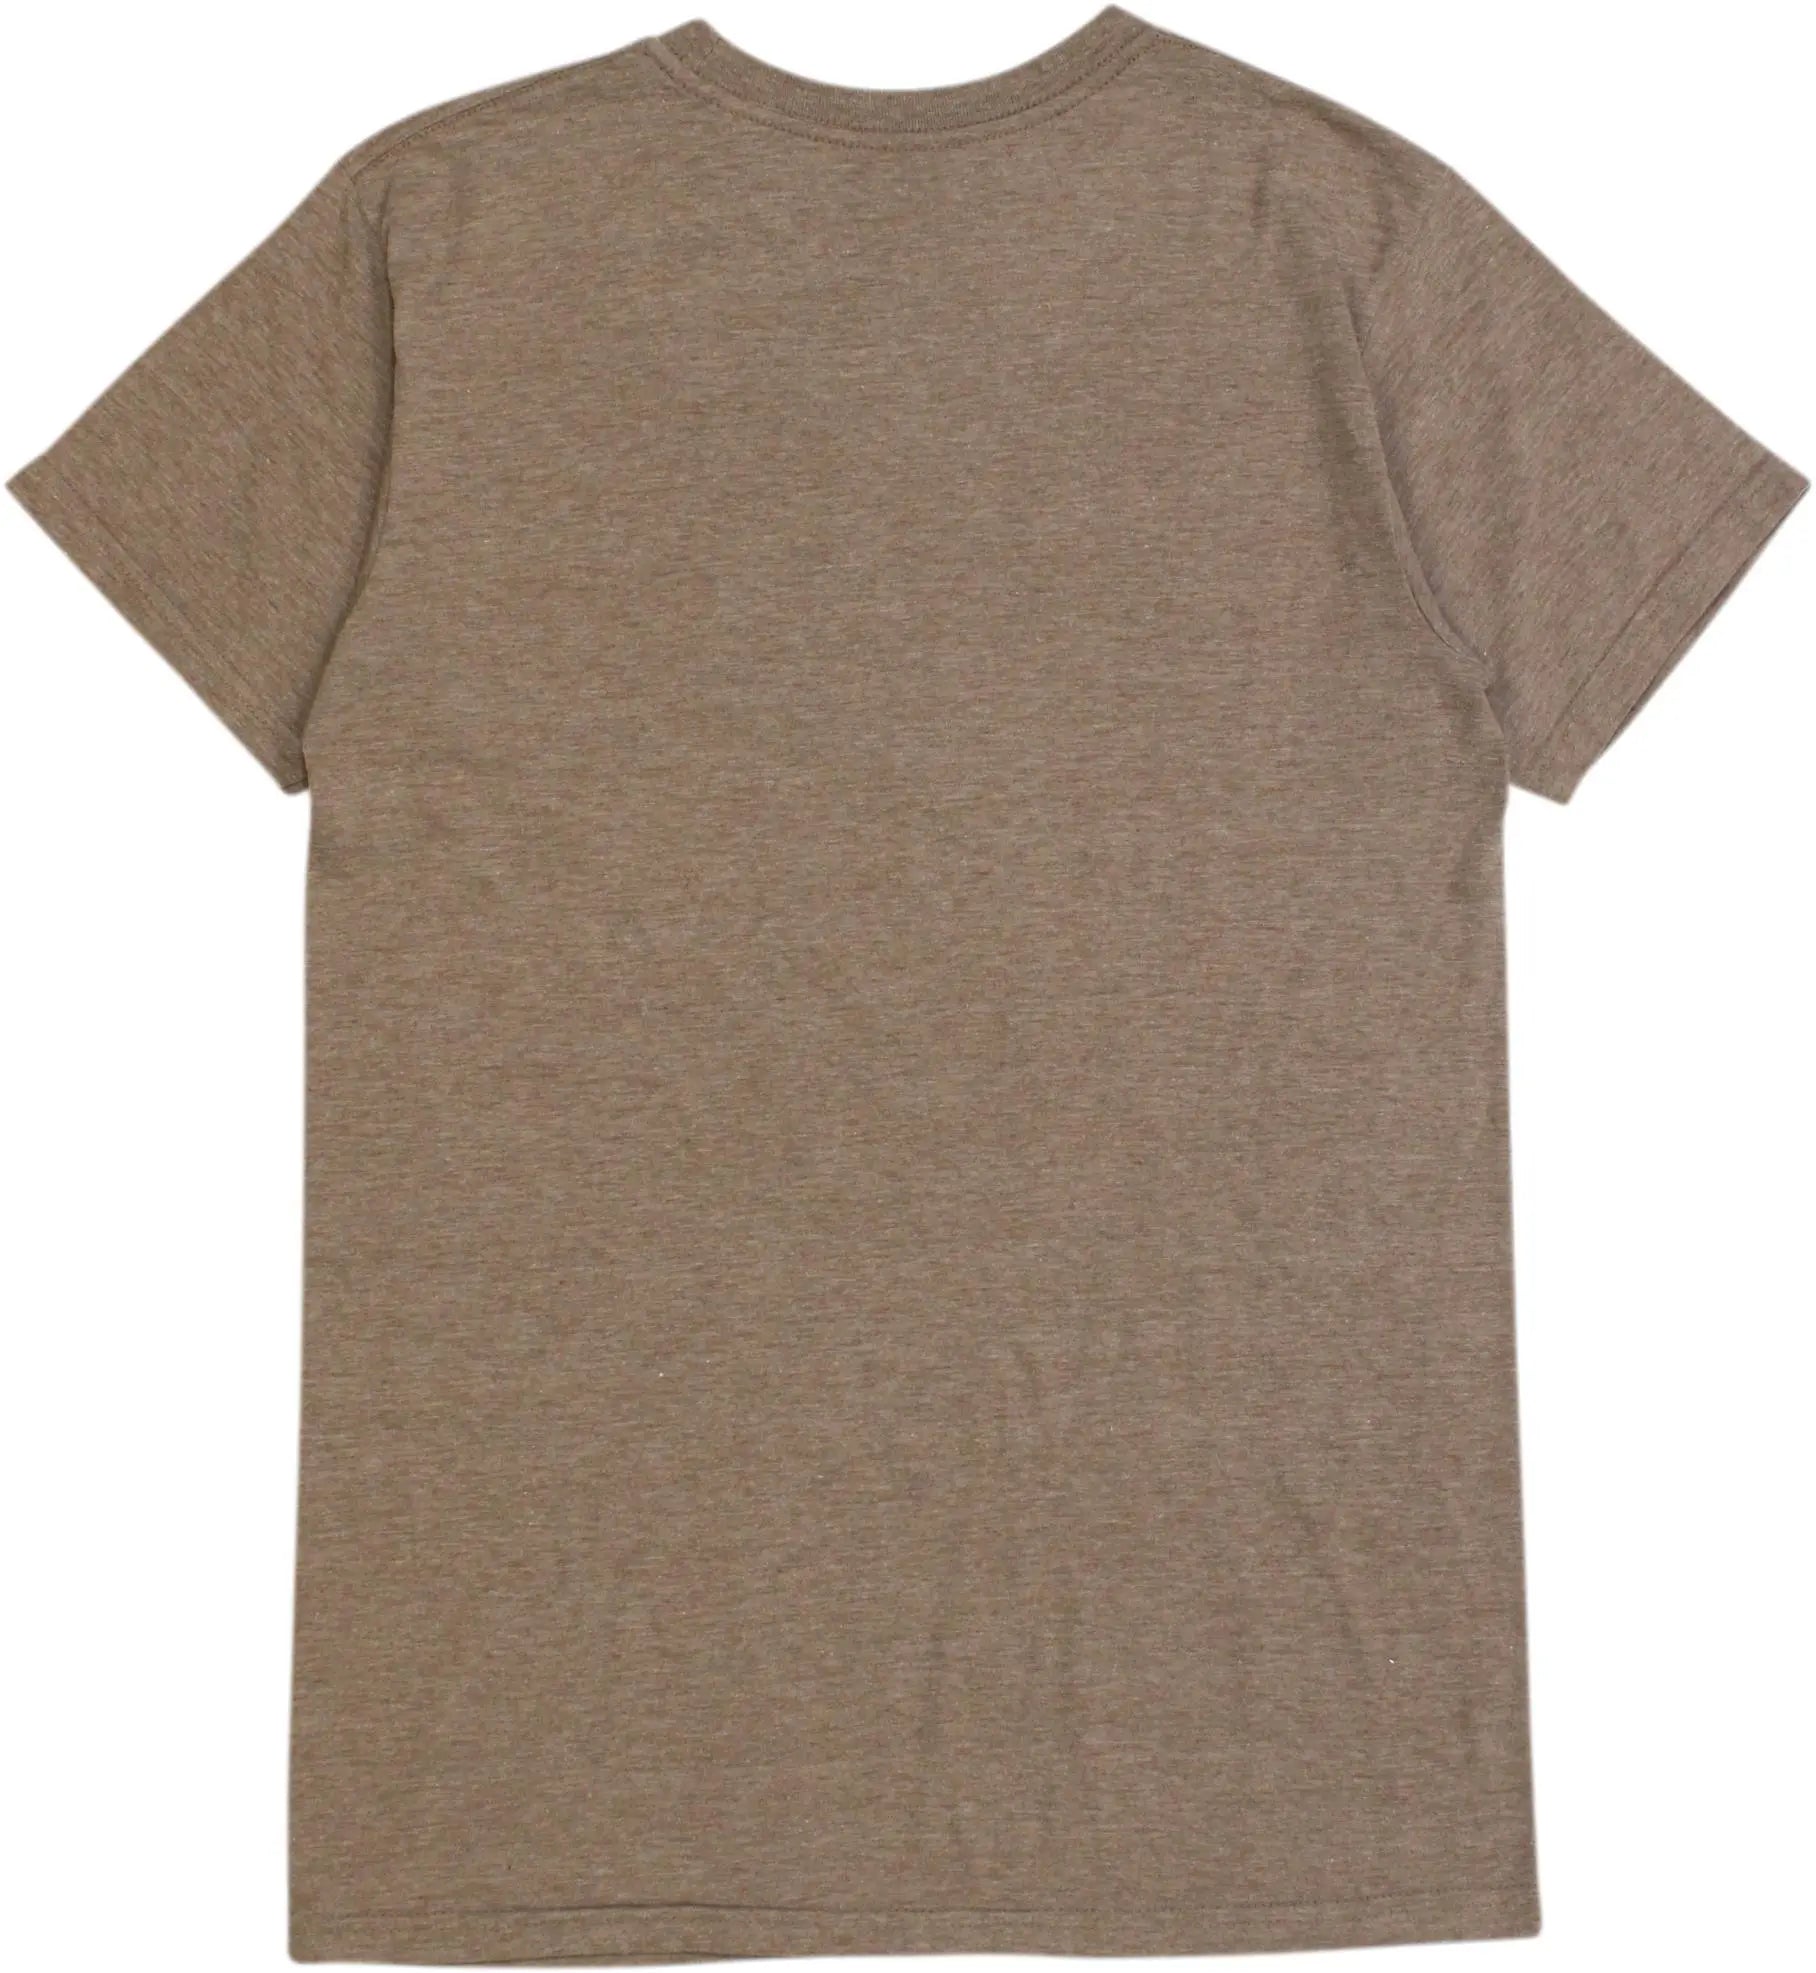 Billabong - Billabong T-Shirt- ThriftTale.com - Vintage and second handclothing